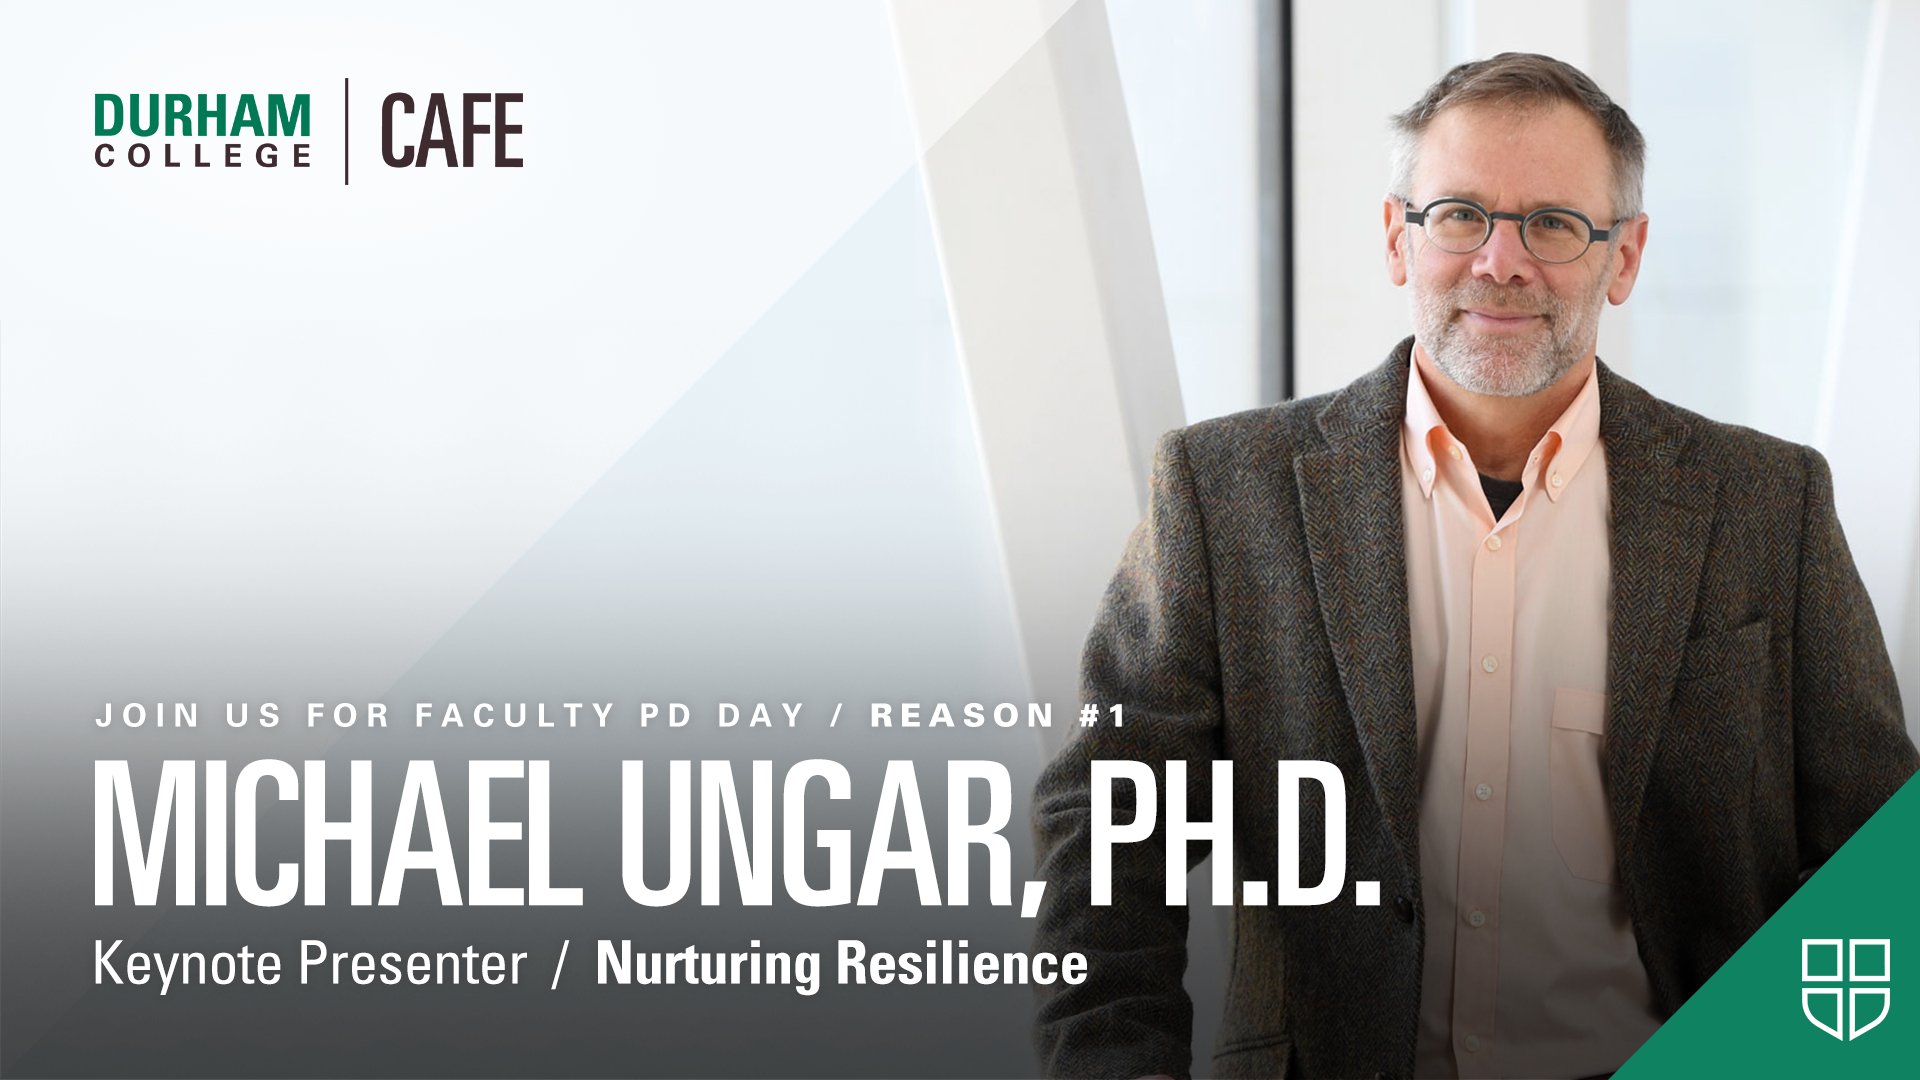 Michael Ungar, Ph.D. - Keynote Presenter / Nurturing Resilience